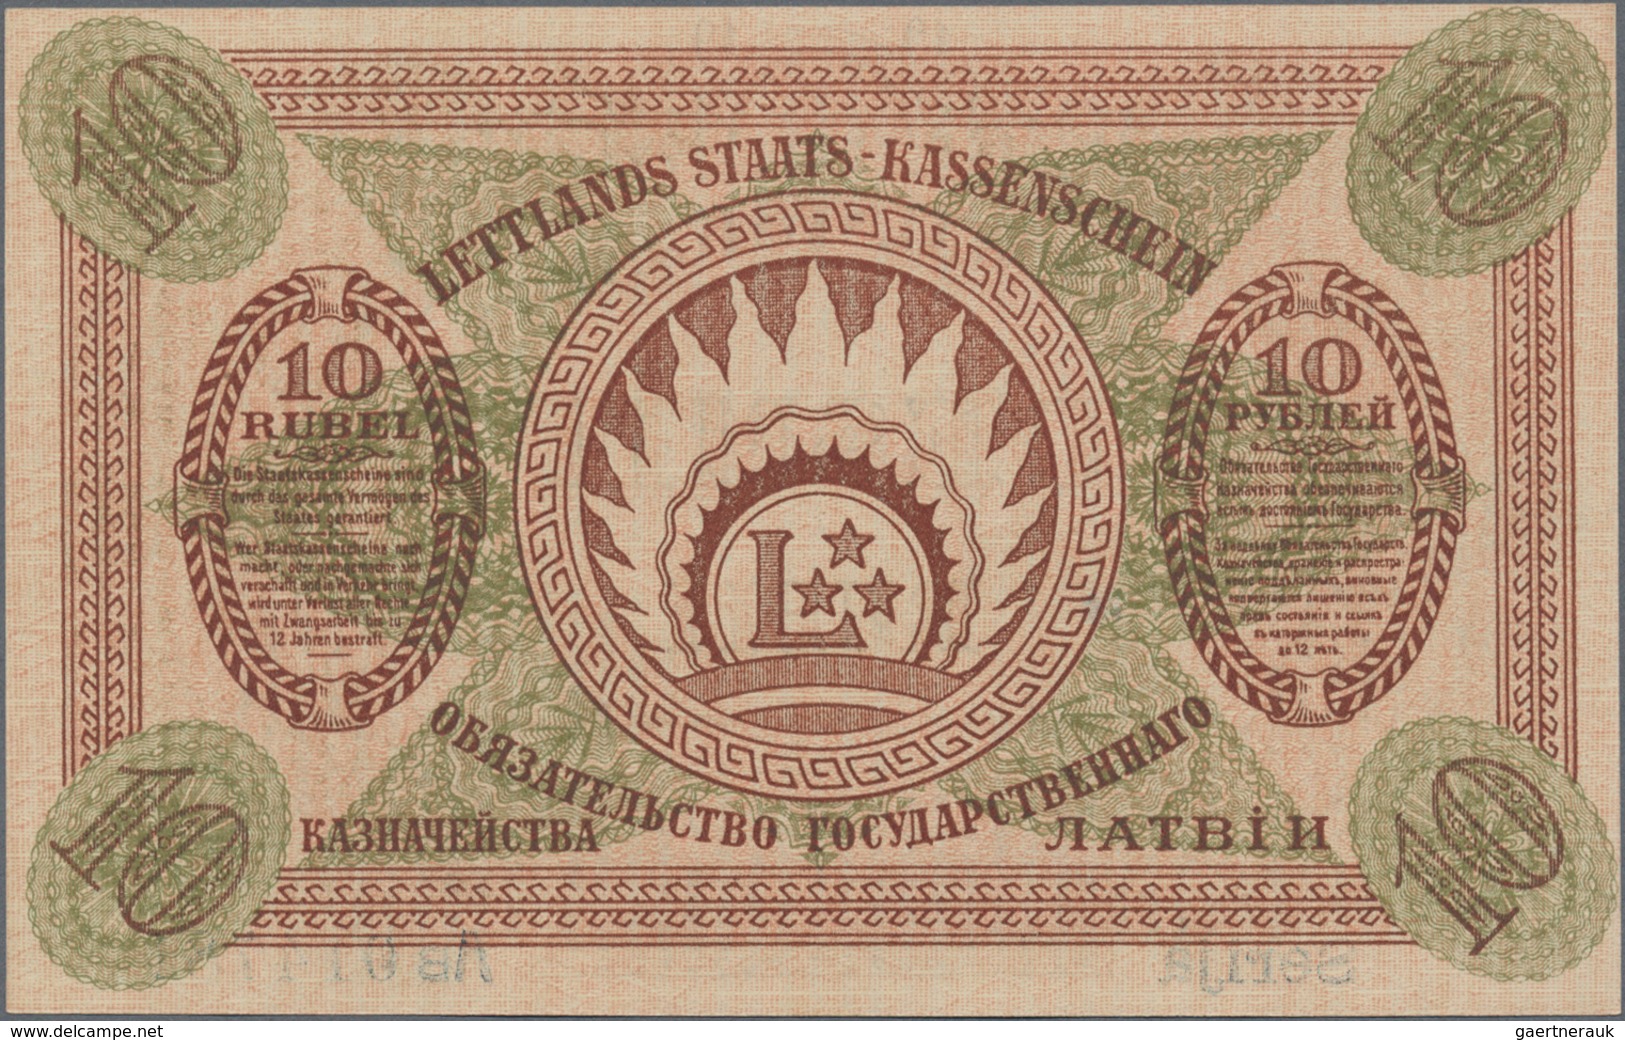 Latvia / Lettland: 10 Rubli 1919 P. 4b, Series "AB", Sign. Erhards, In Condition: UNC. - Latvia